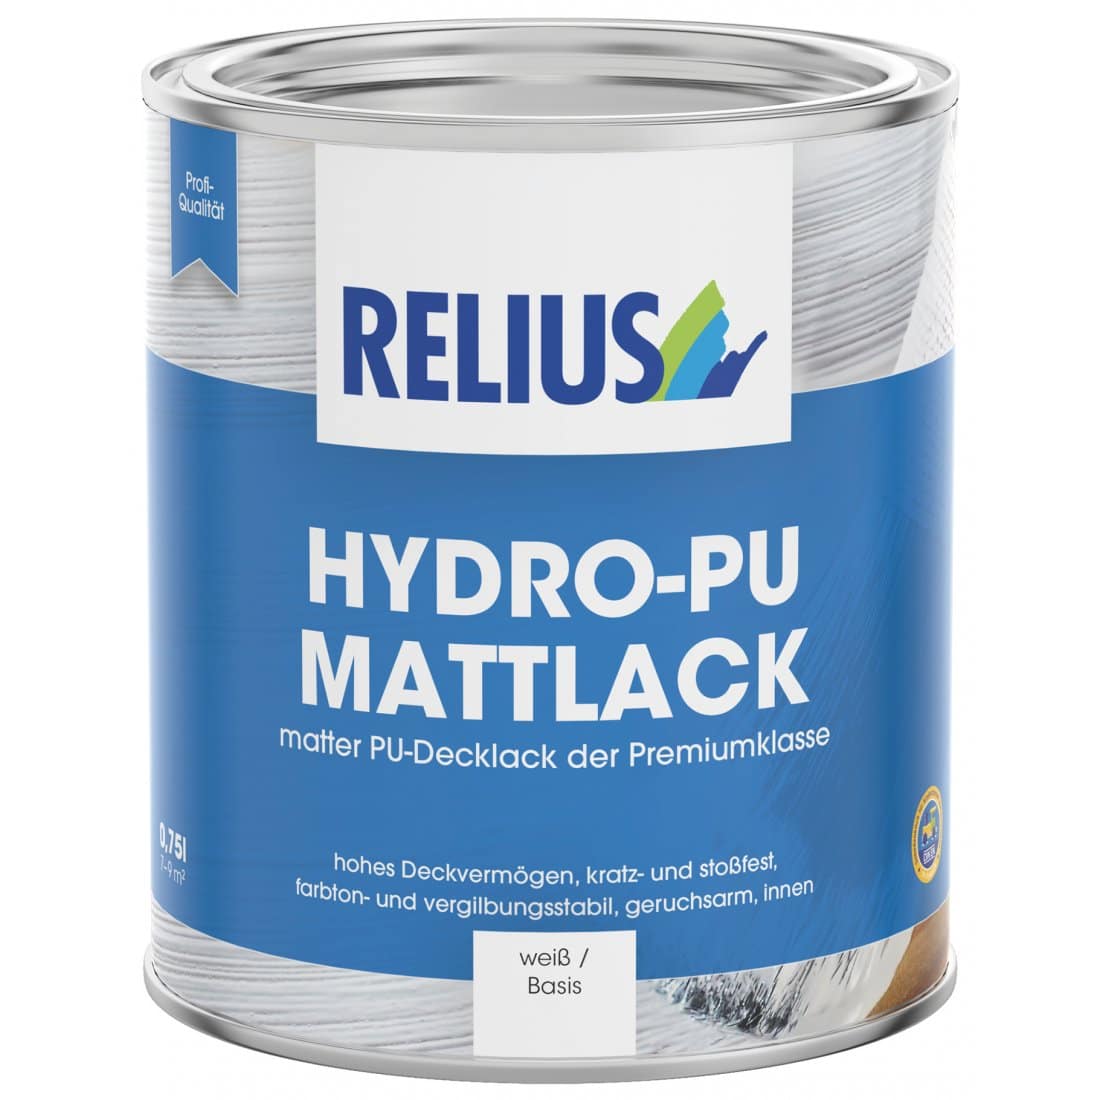 Relius Hydro PU Mattlack